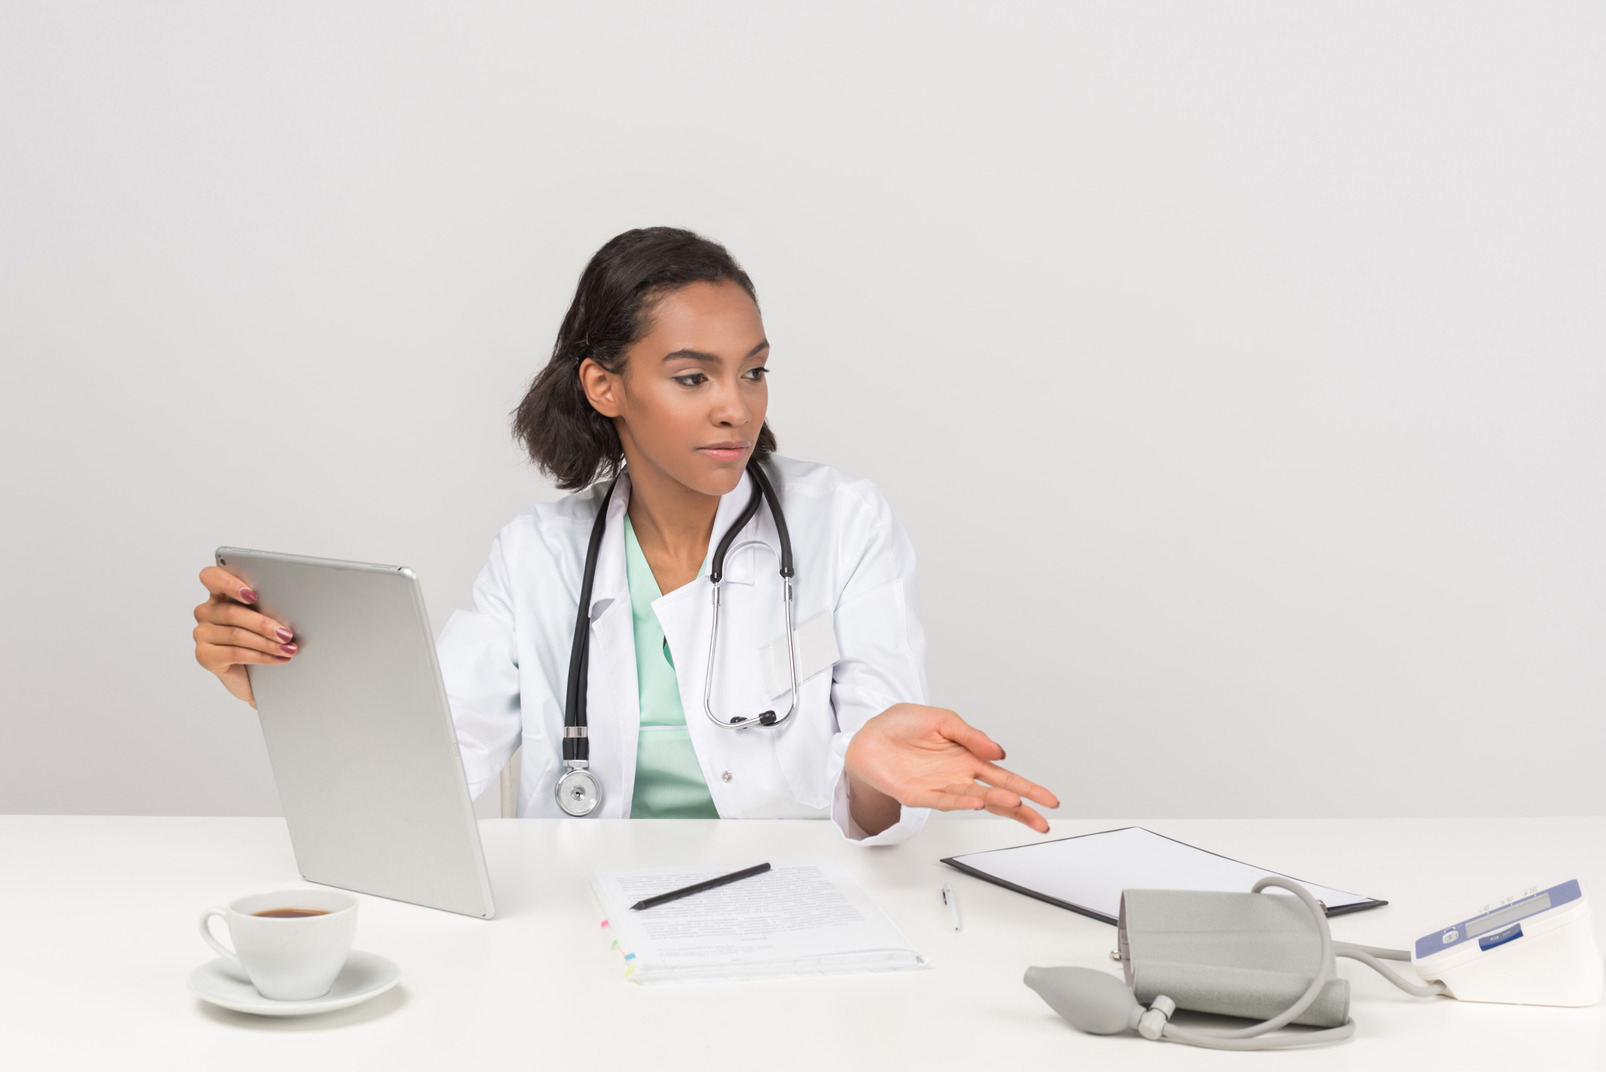 Effective patient-physician communication